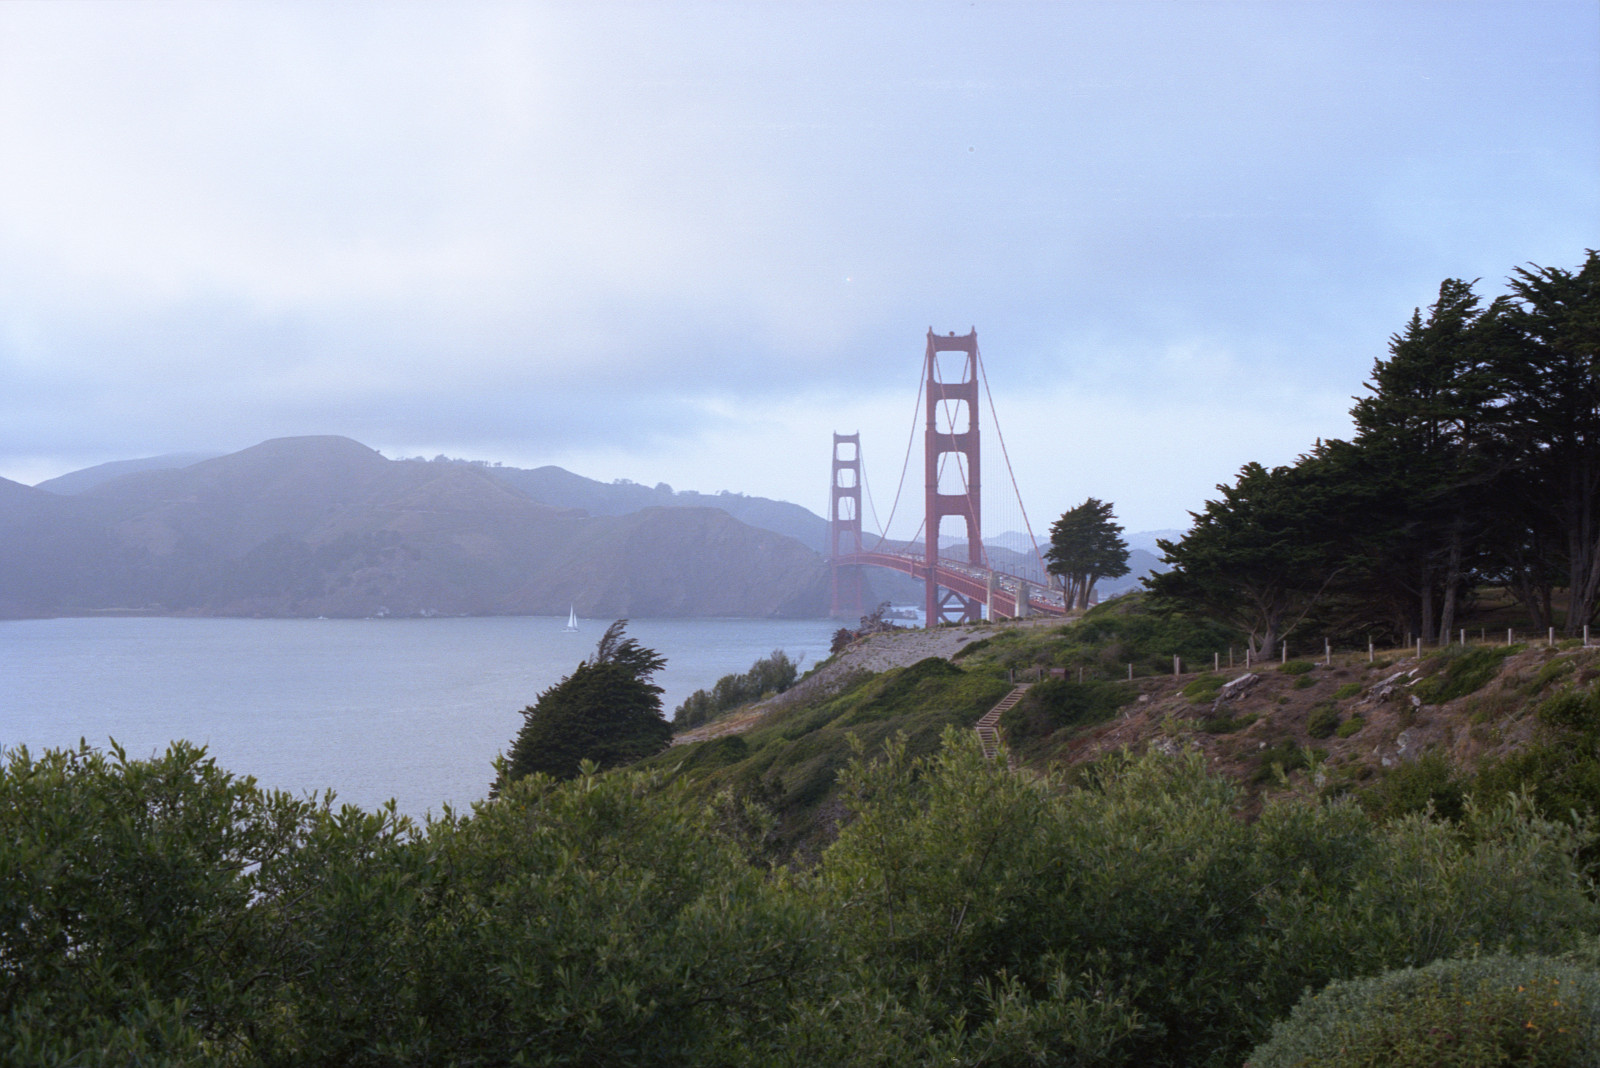 Looking toward the Golden Gate Bridge from the Presidio of San Francisco.